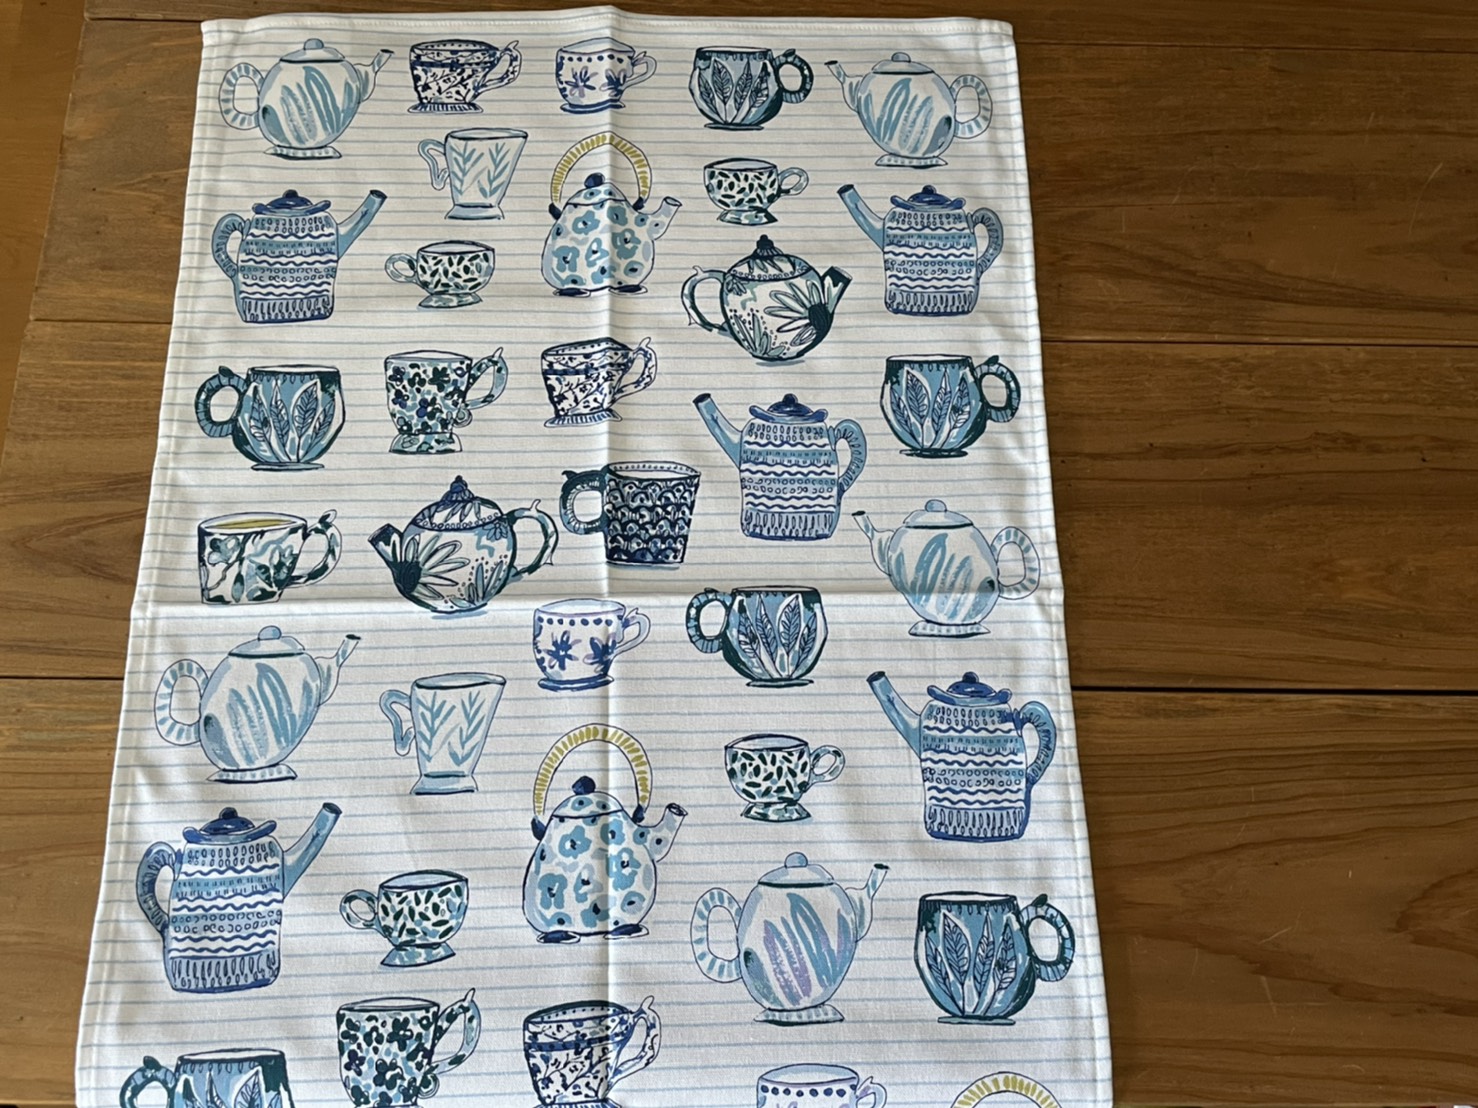 Ulster Weavers Tea Towel From England イギリスのティータオル